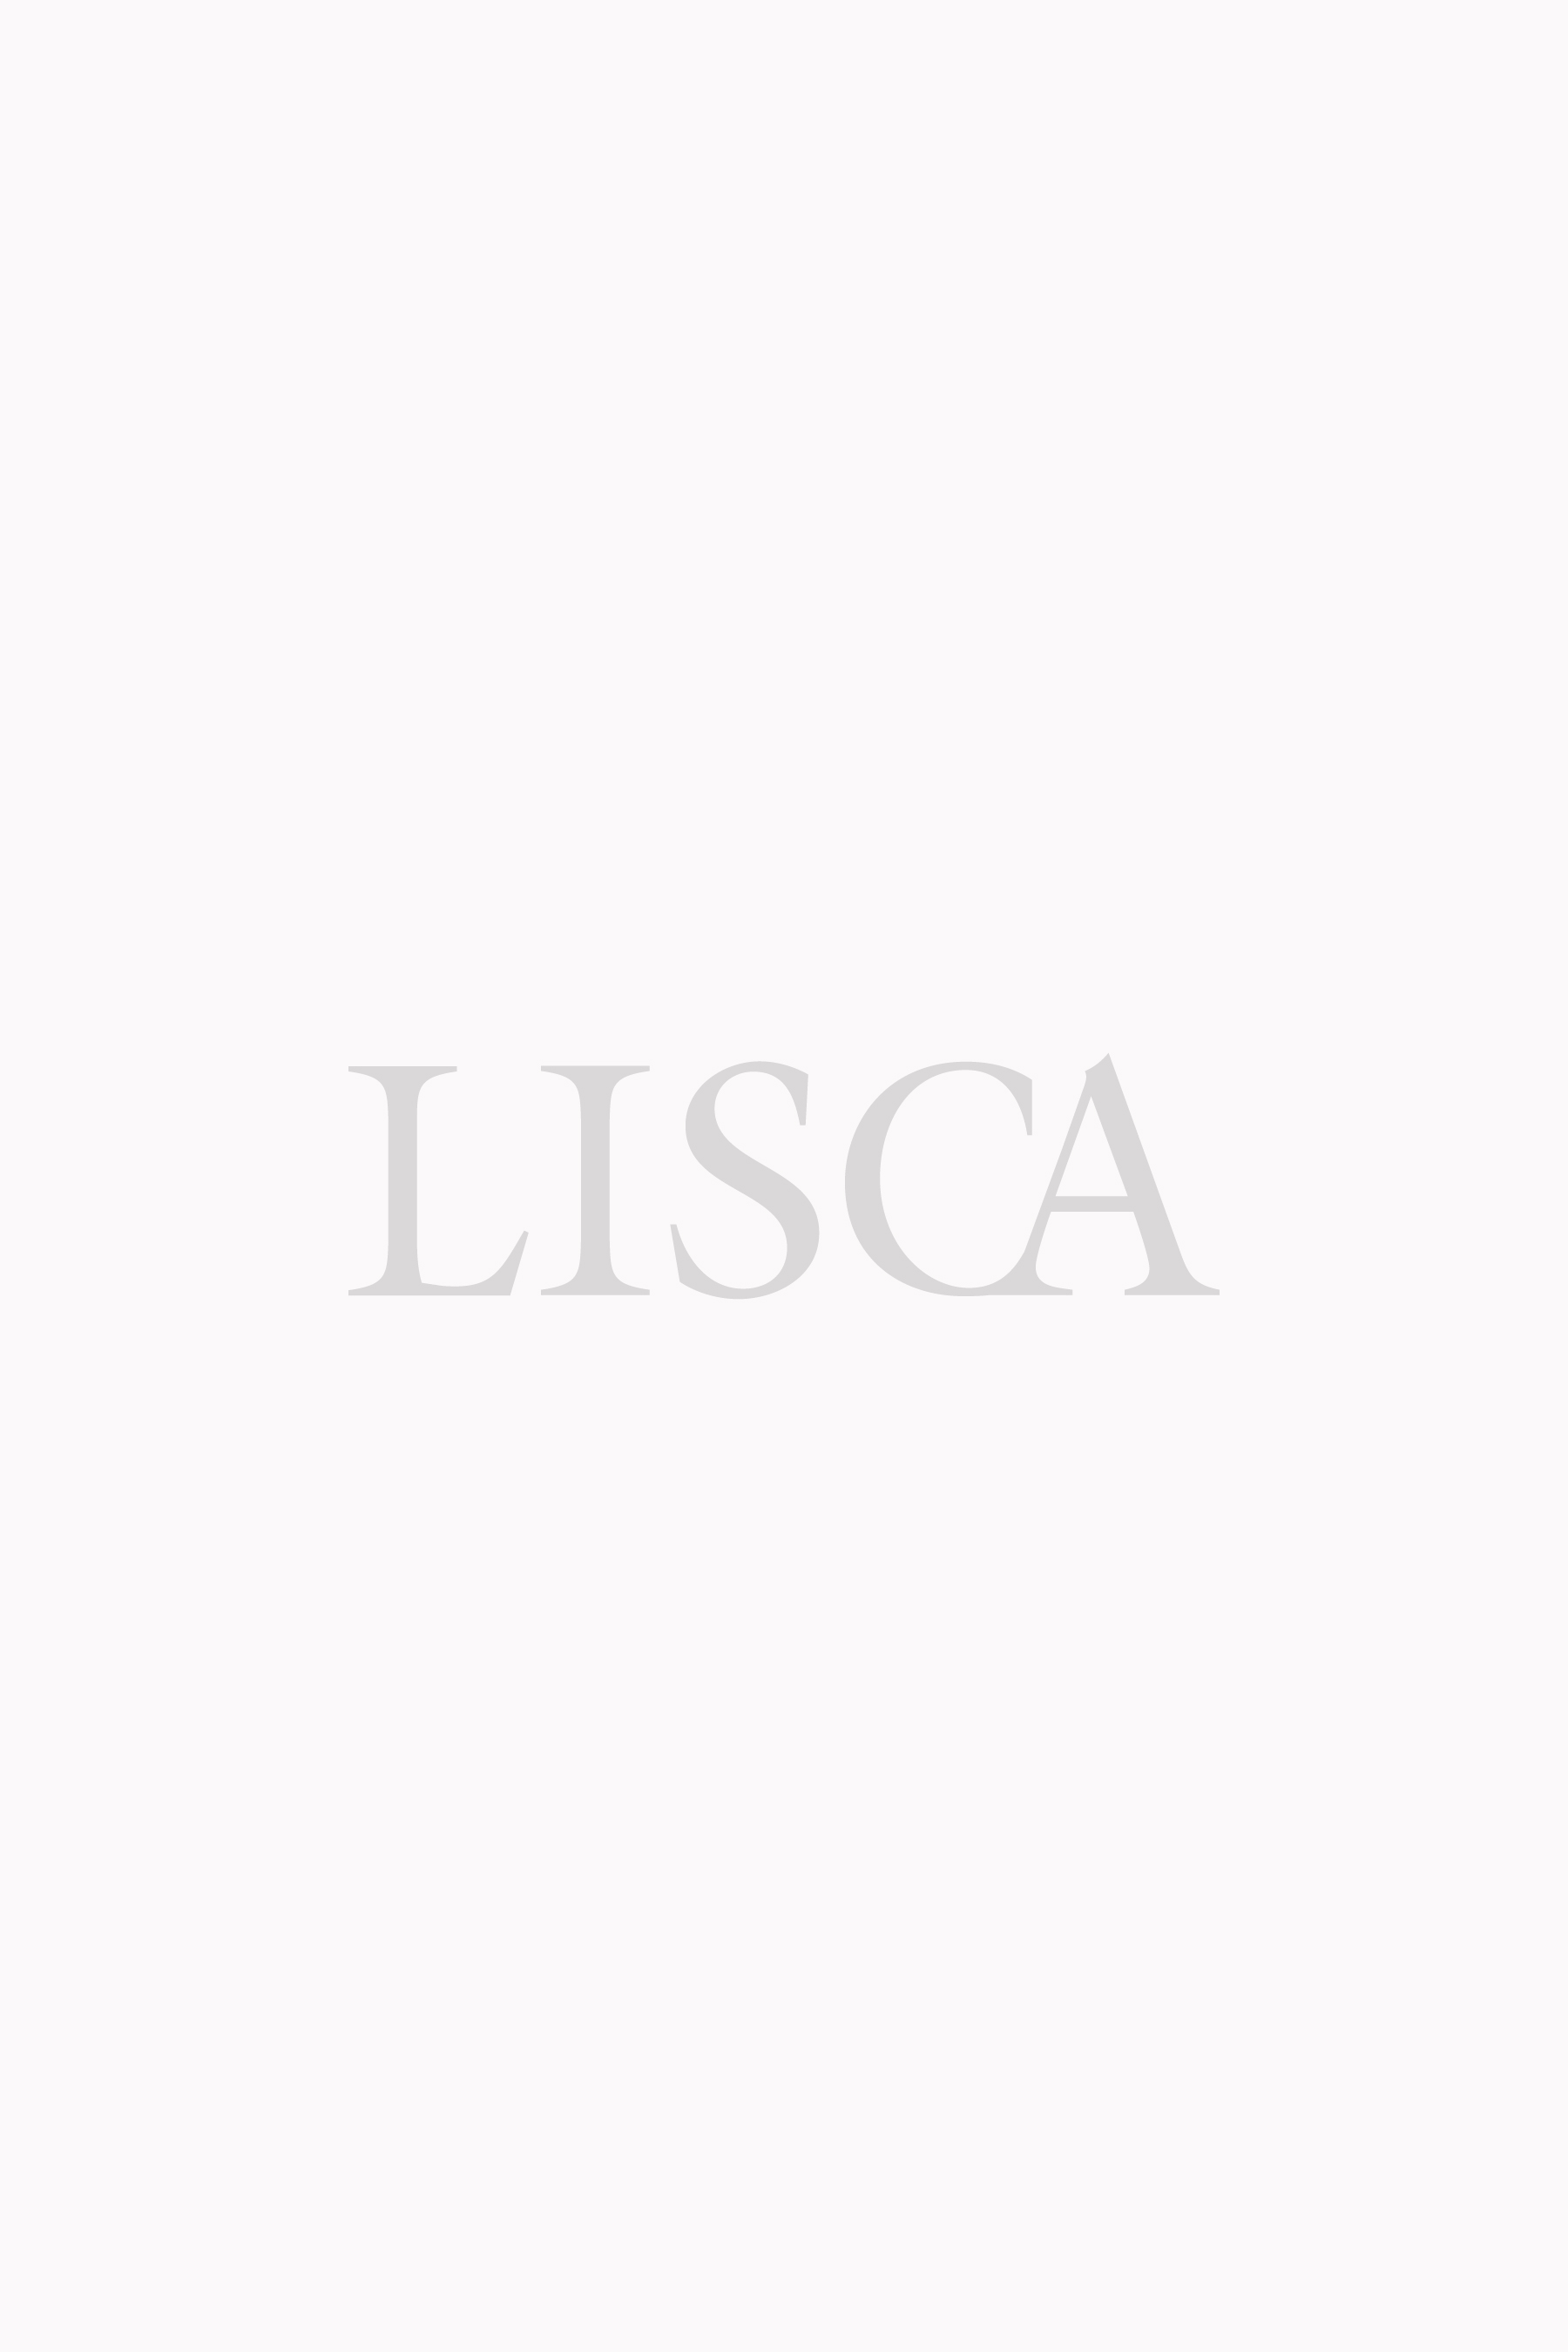 Lisca i Cheek by Lisca